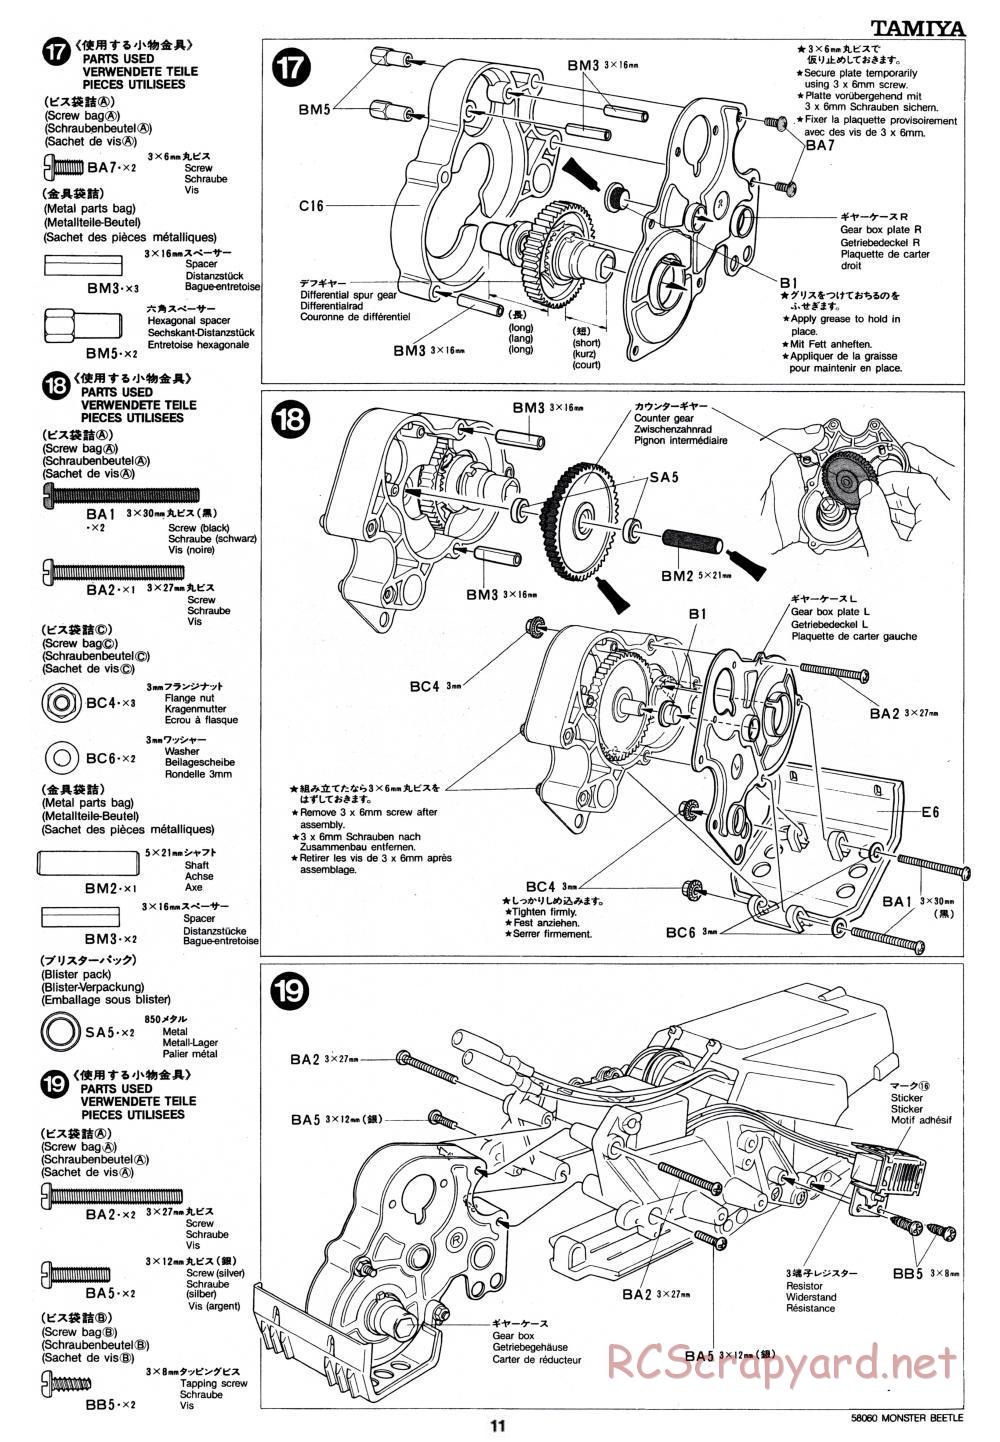 Tamiya - Monster Beetle - 58060 - Manual - Page 11